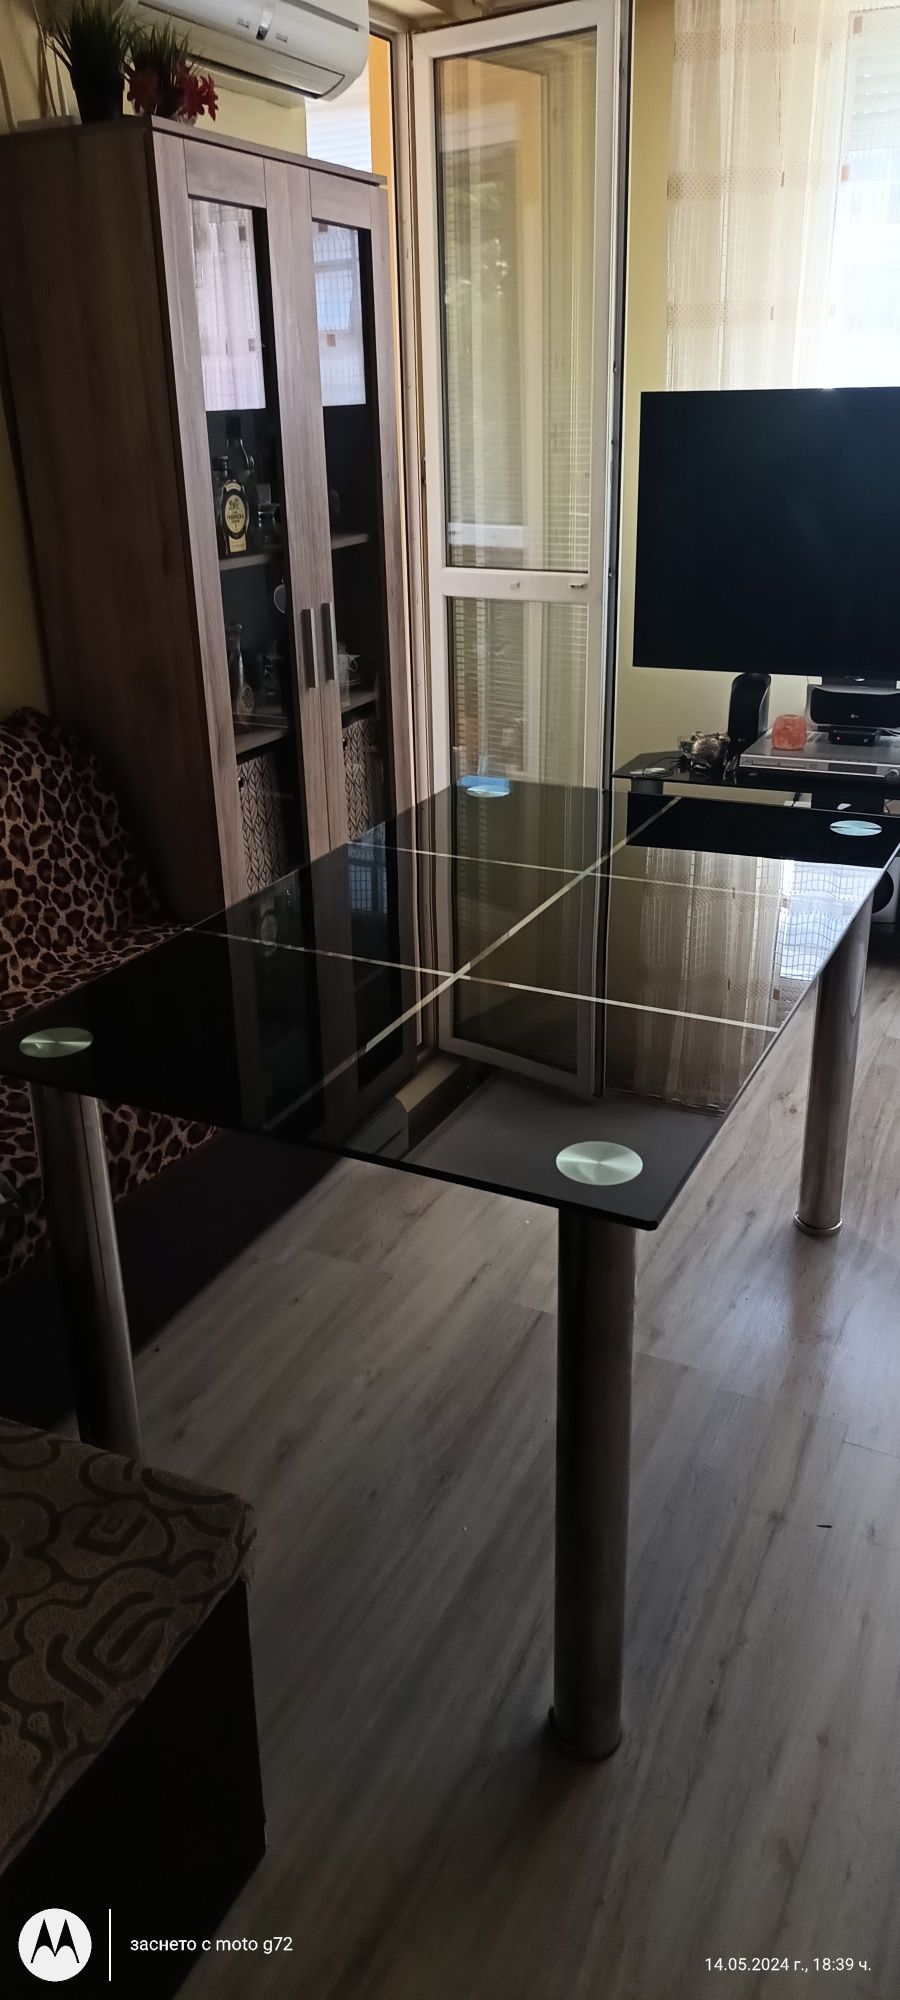 Трапезна стъклена маса